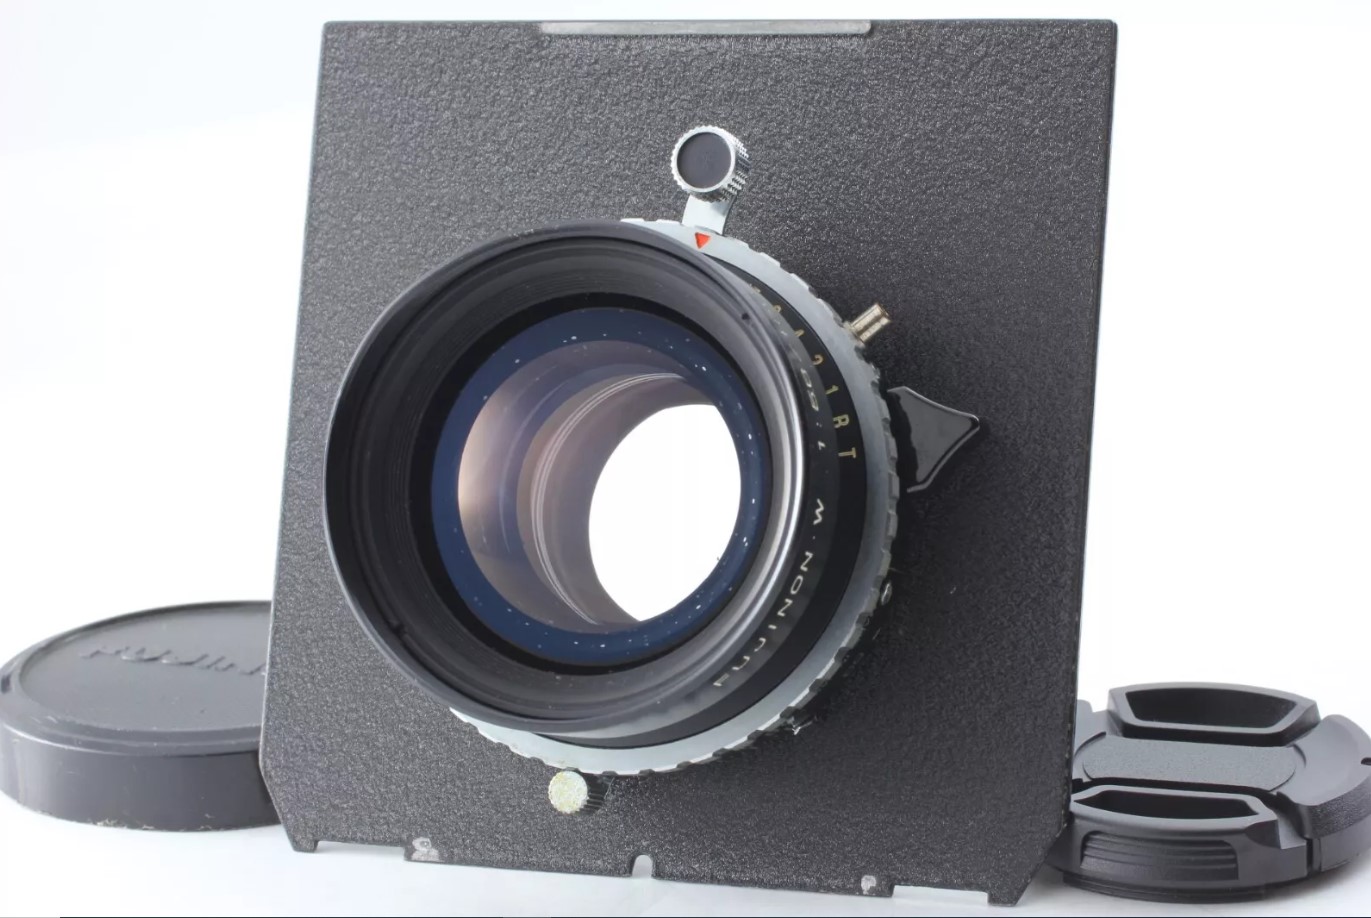 Fujifilm Fujinon W 150mm f/5.6 Large Format